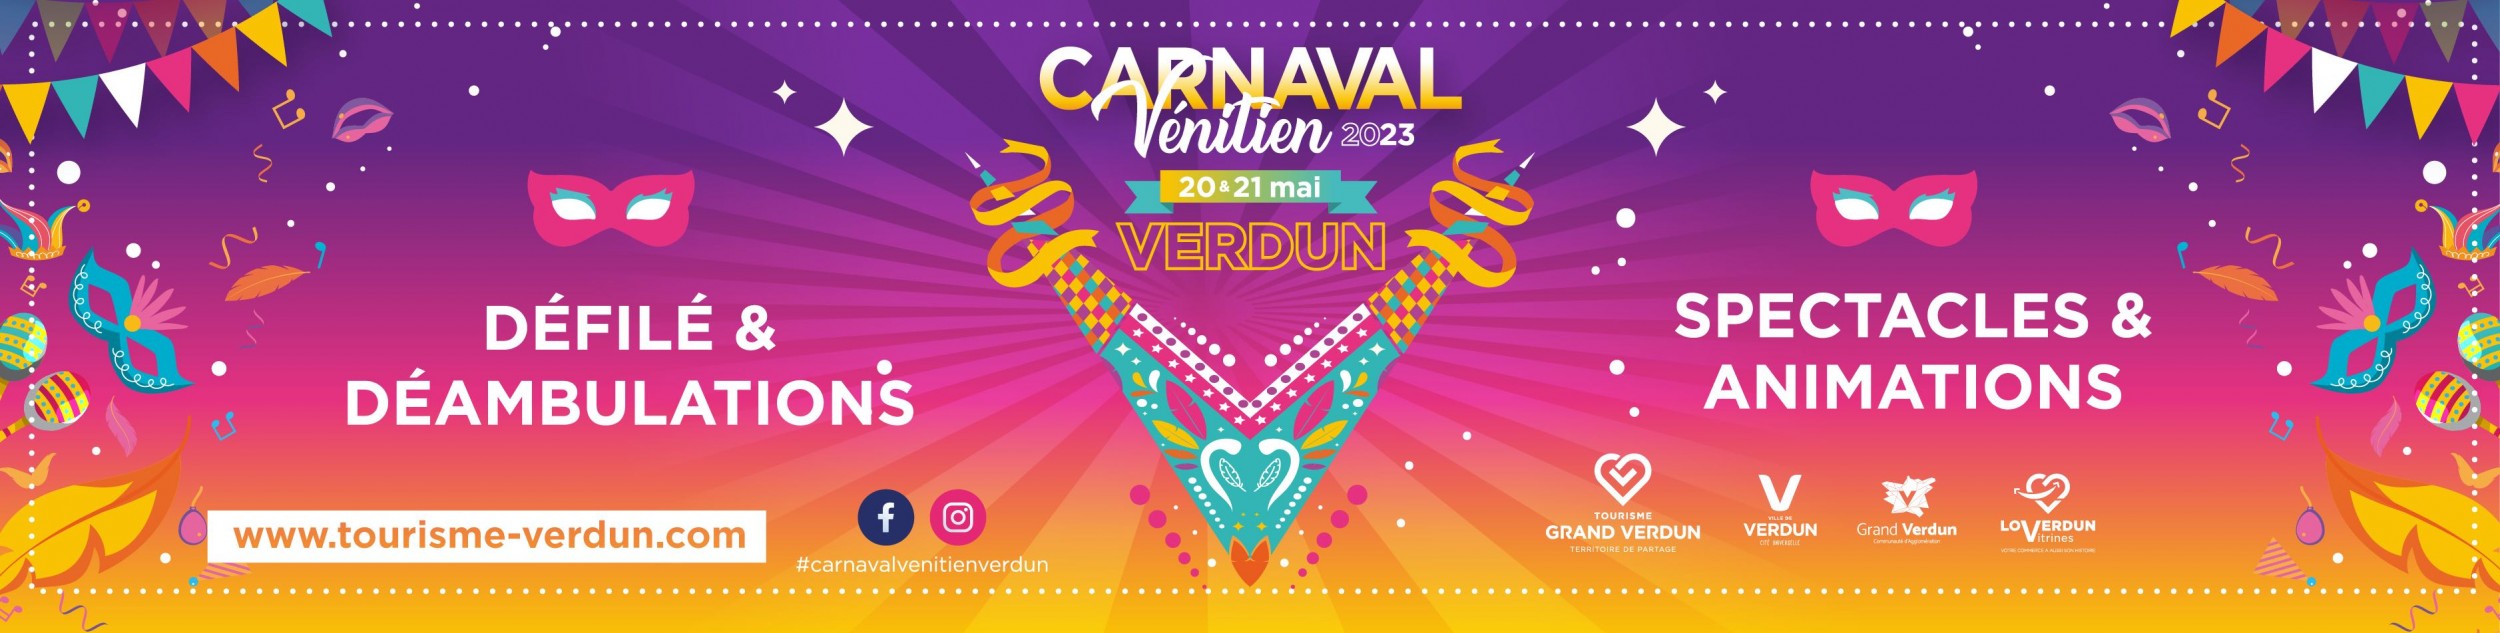 Carnaval Vénitien 2023